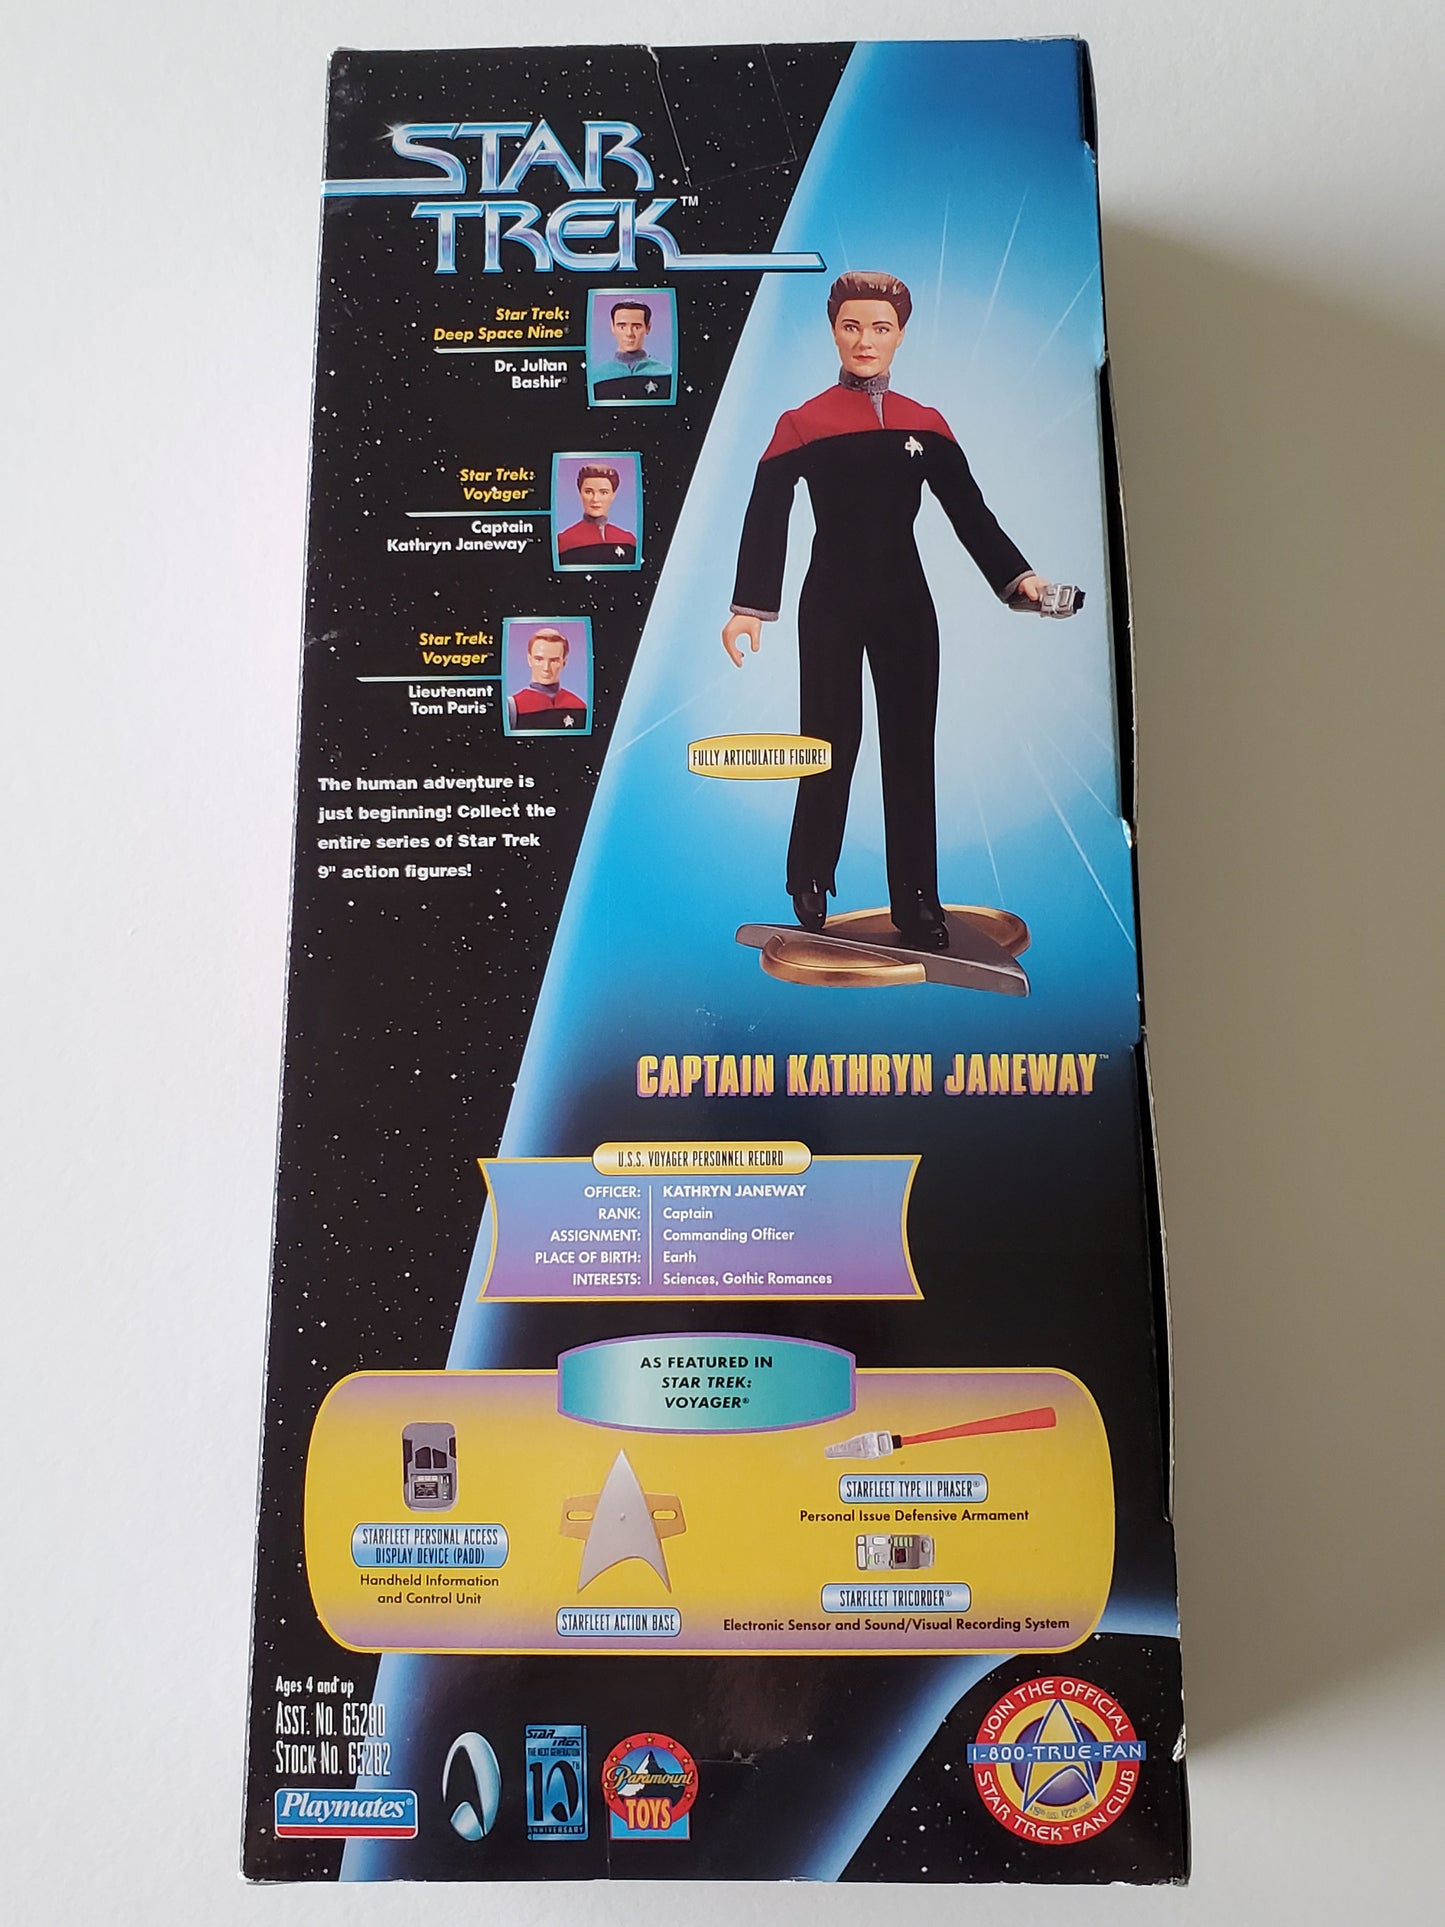 Warp Factor Series 2 Captain Kathryn Janeway from Star Trek